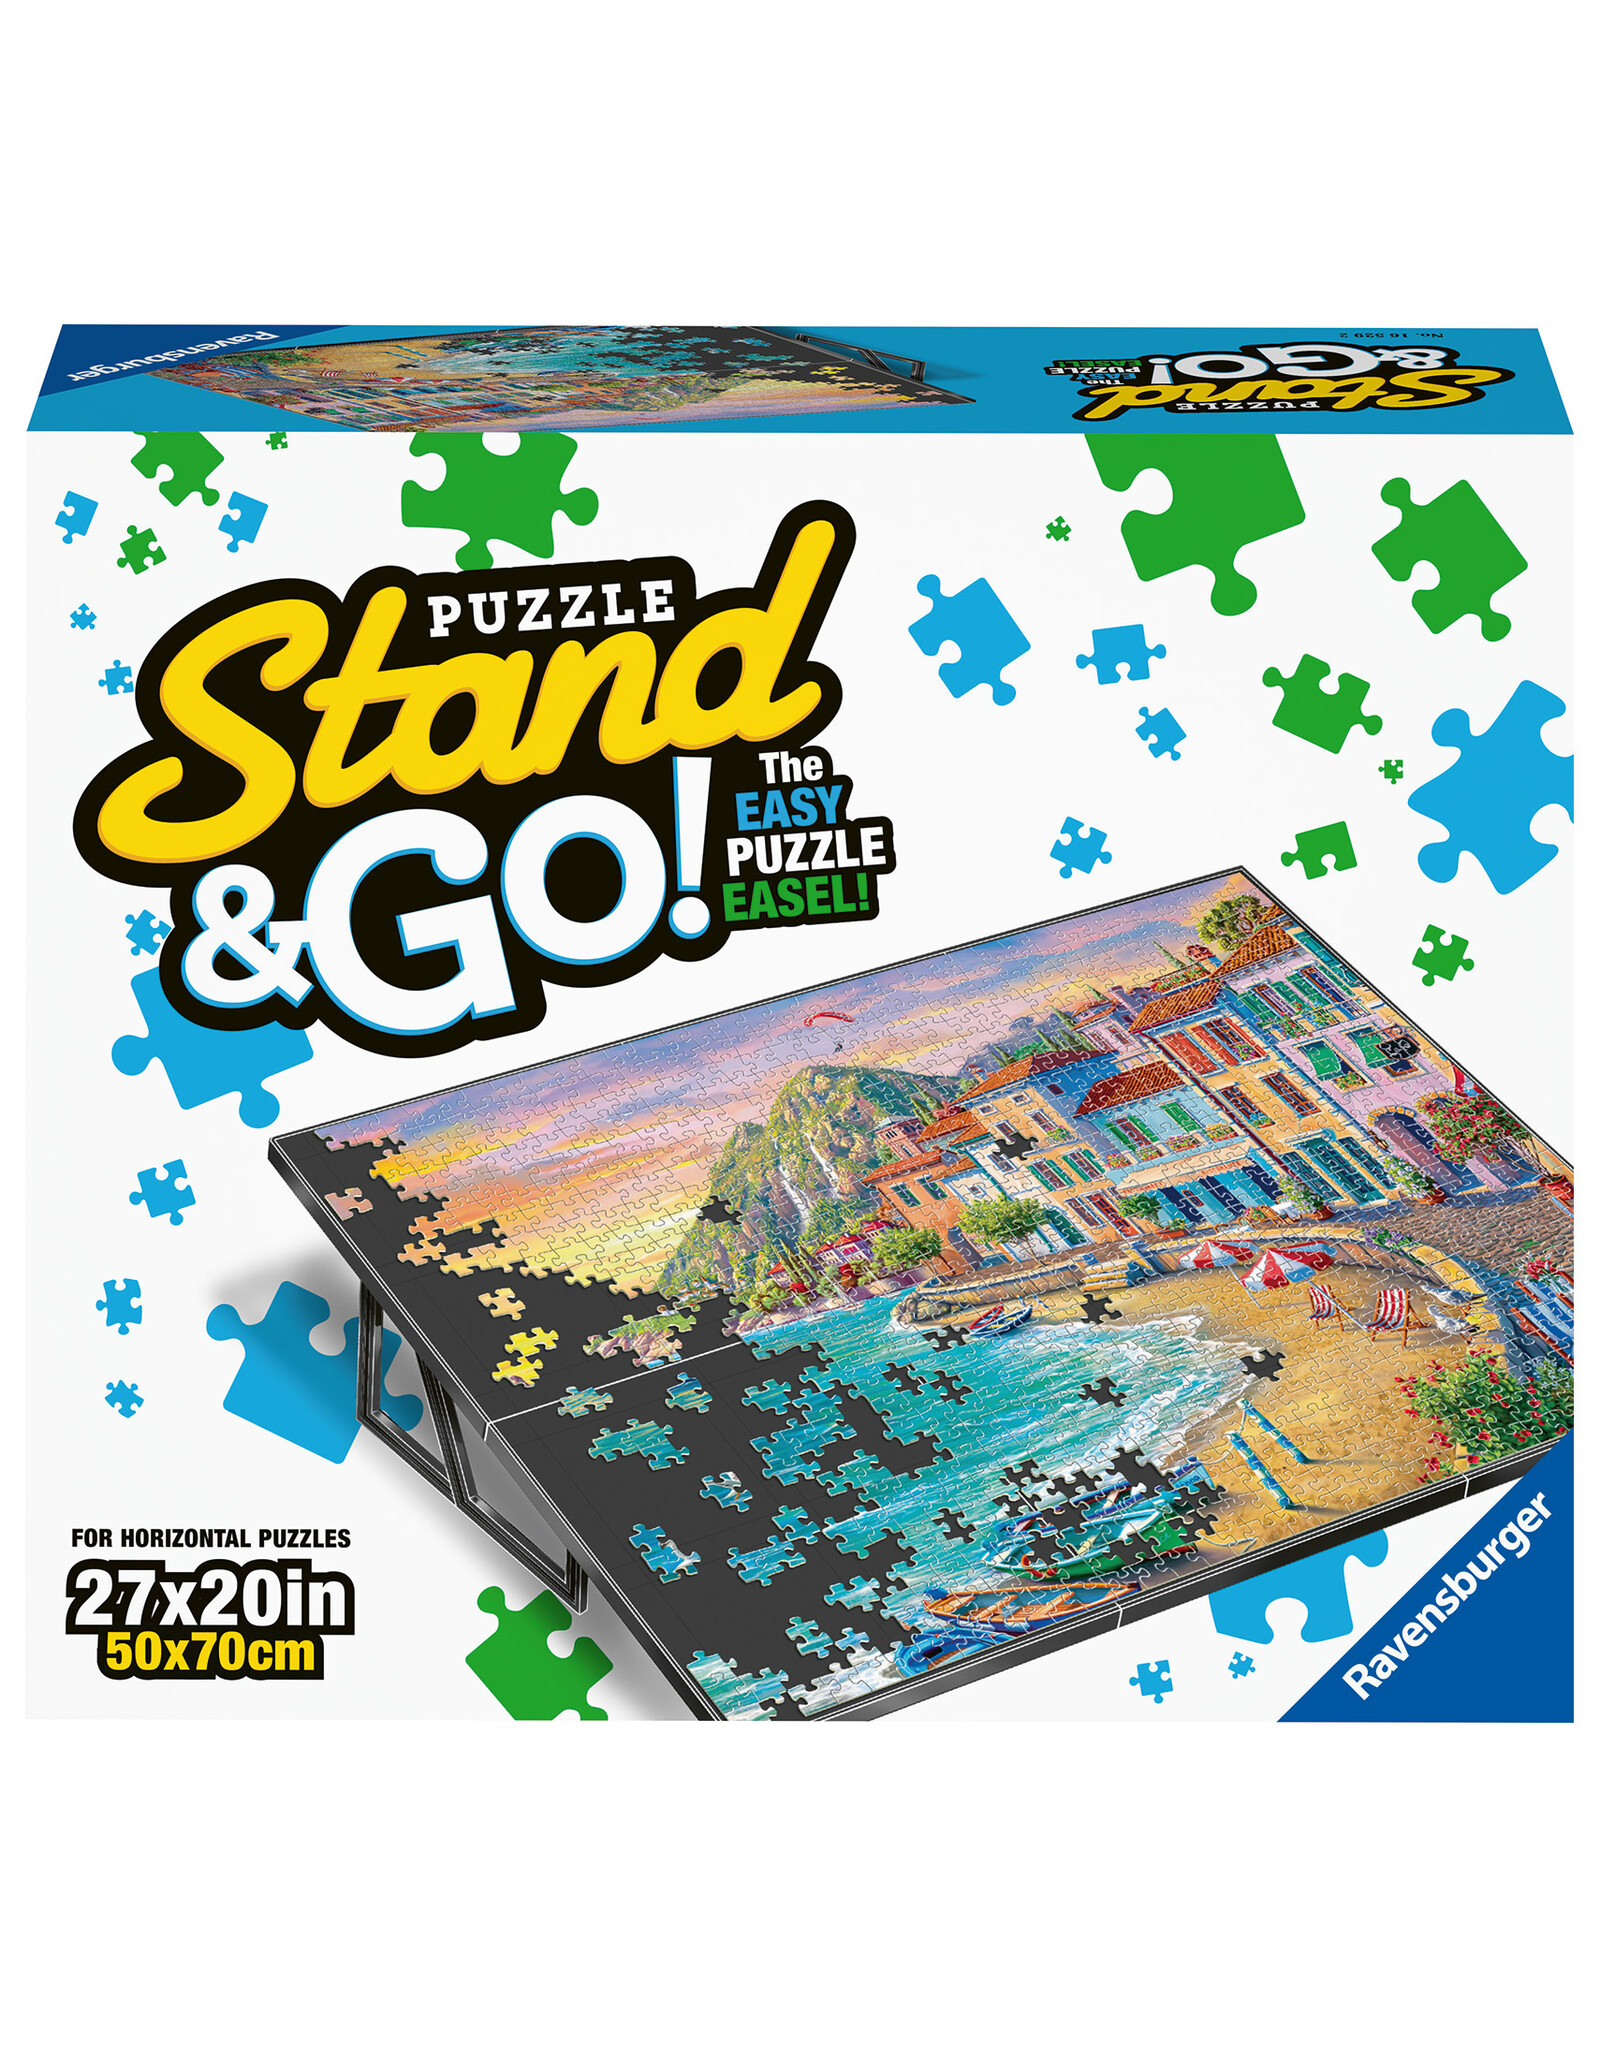 Puzzle Stand & Go! Accessory